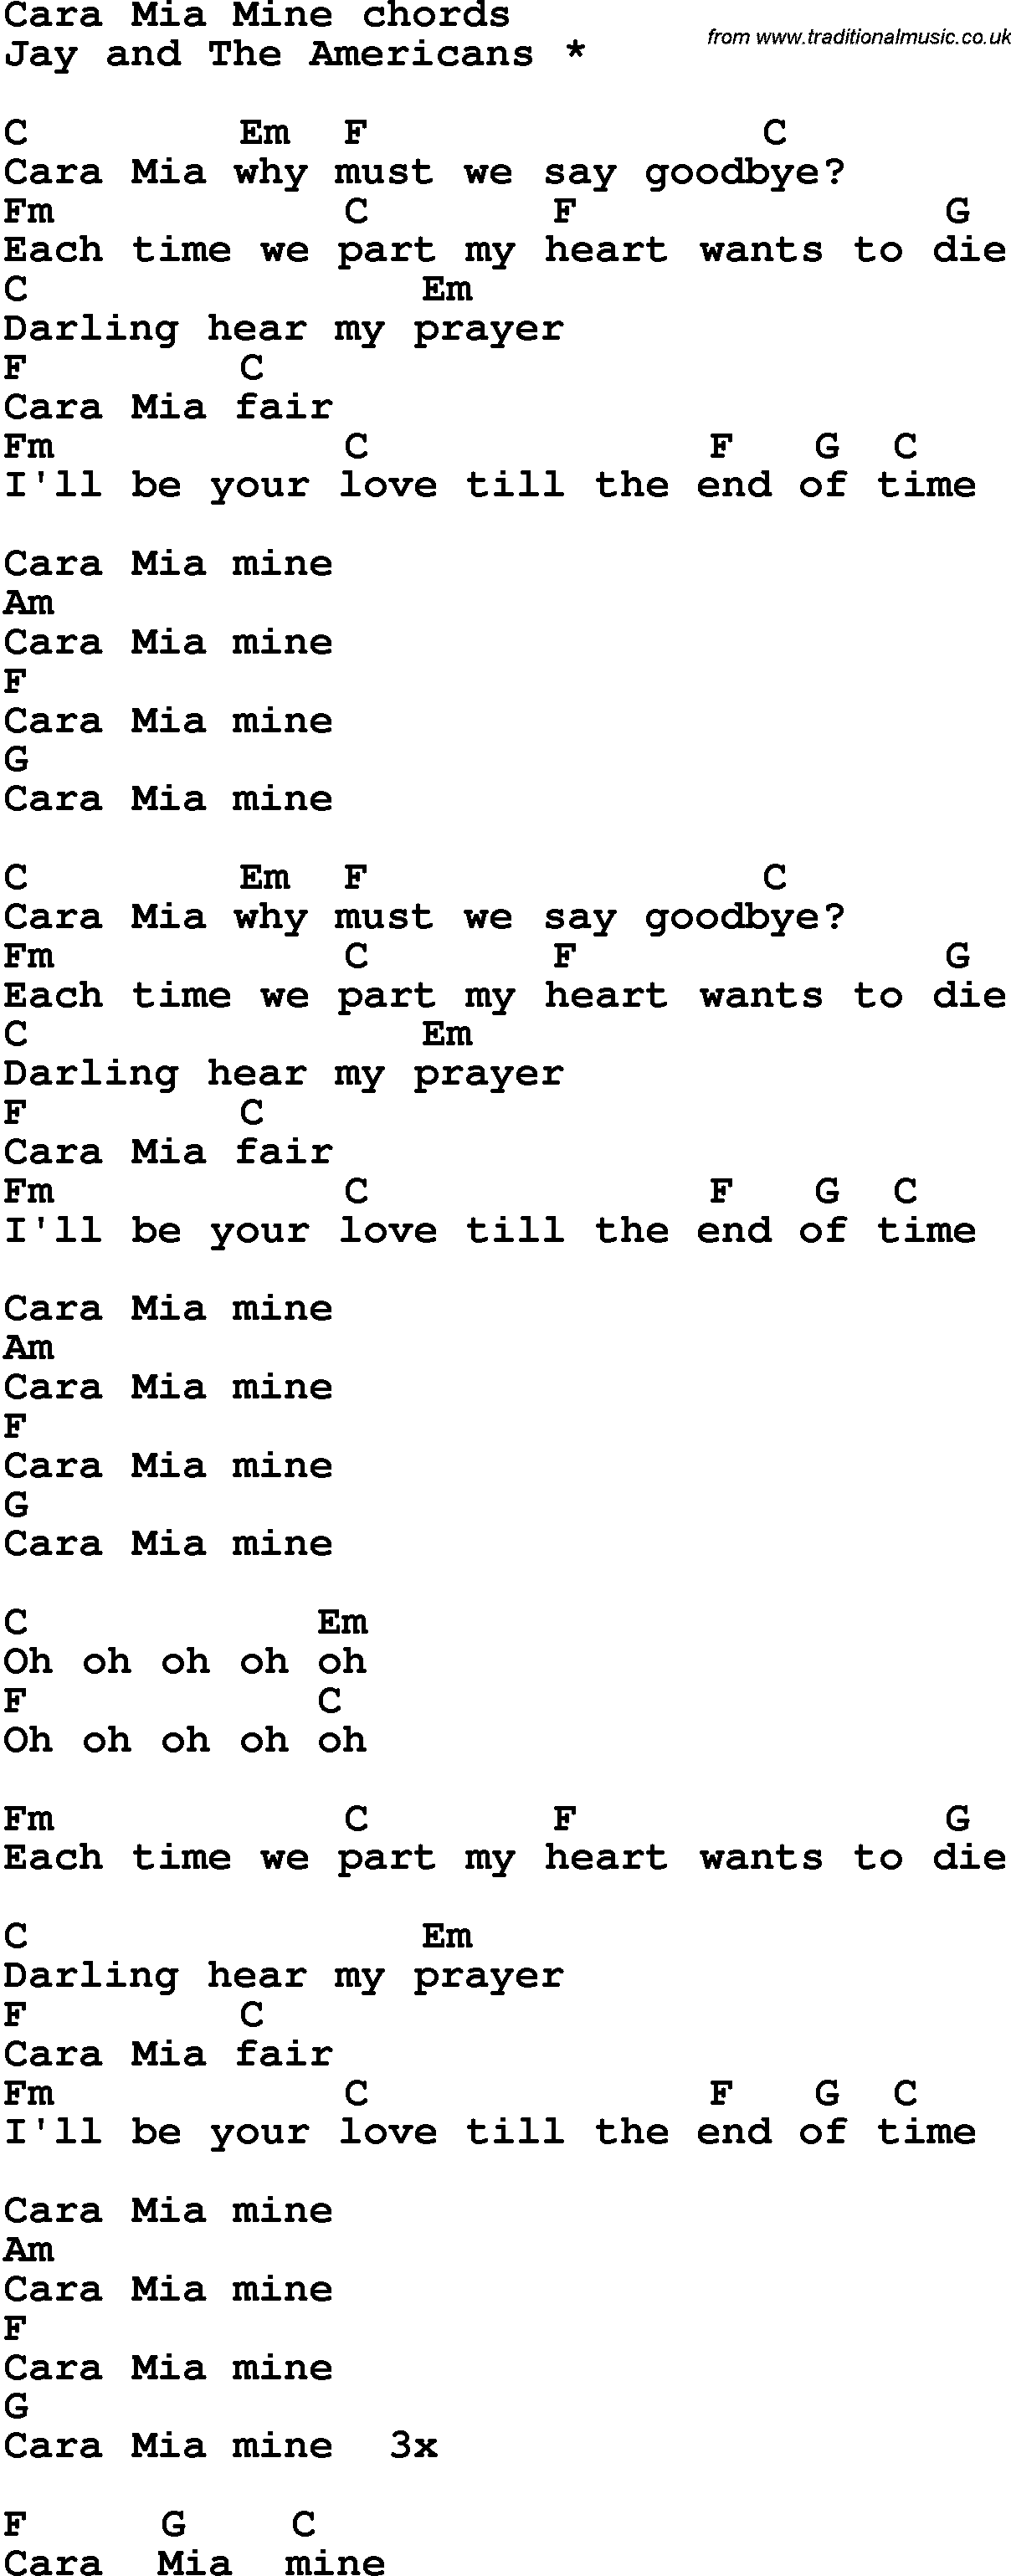 Song Lyrics with guitar chords for Cara Mia Mine